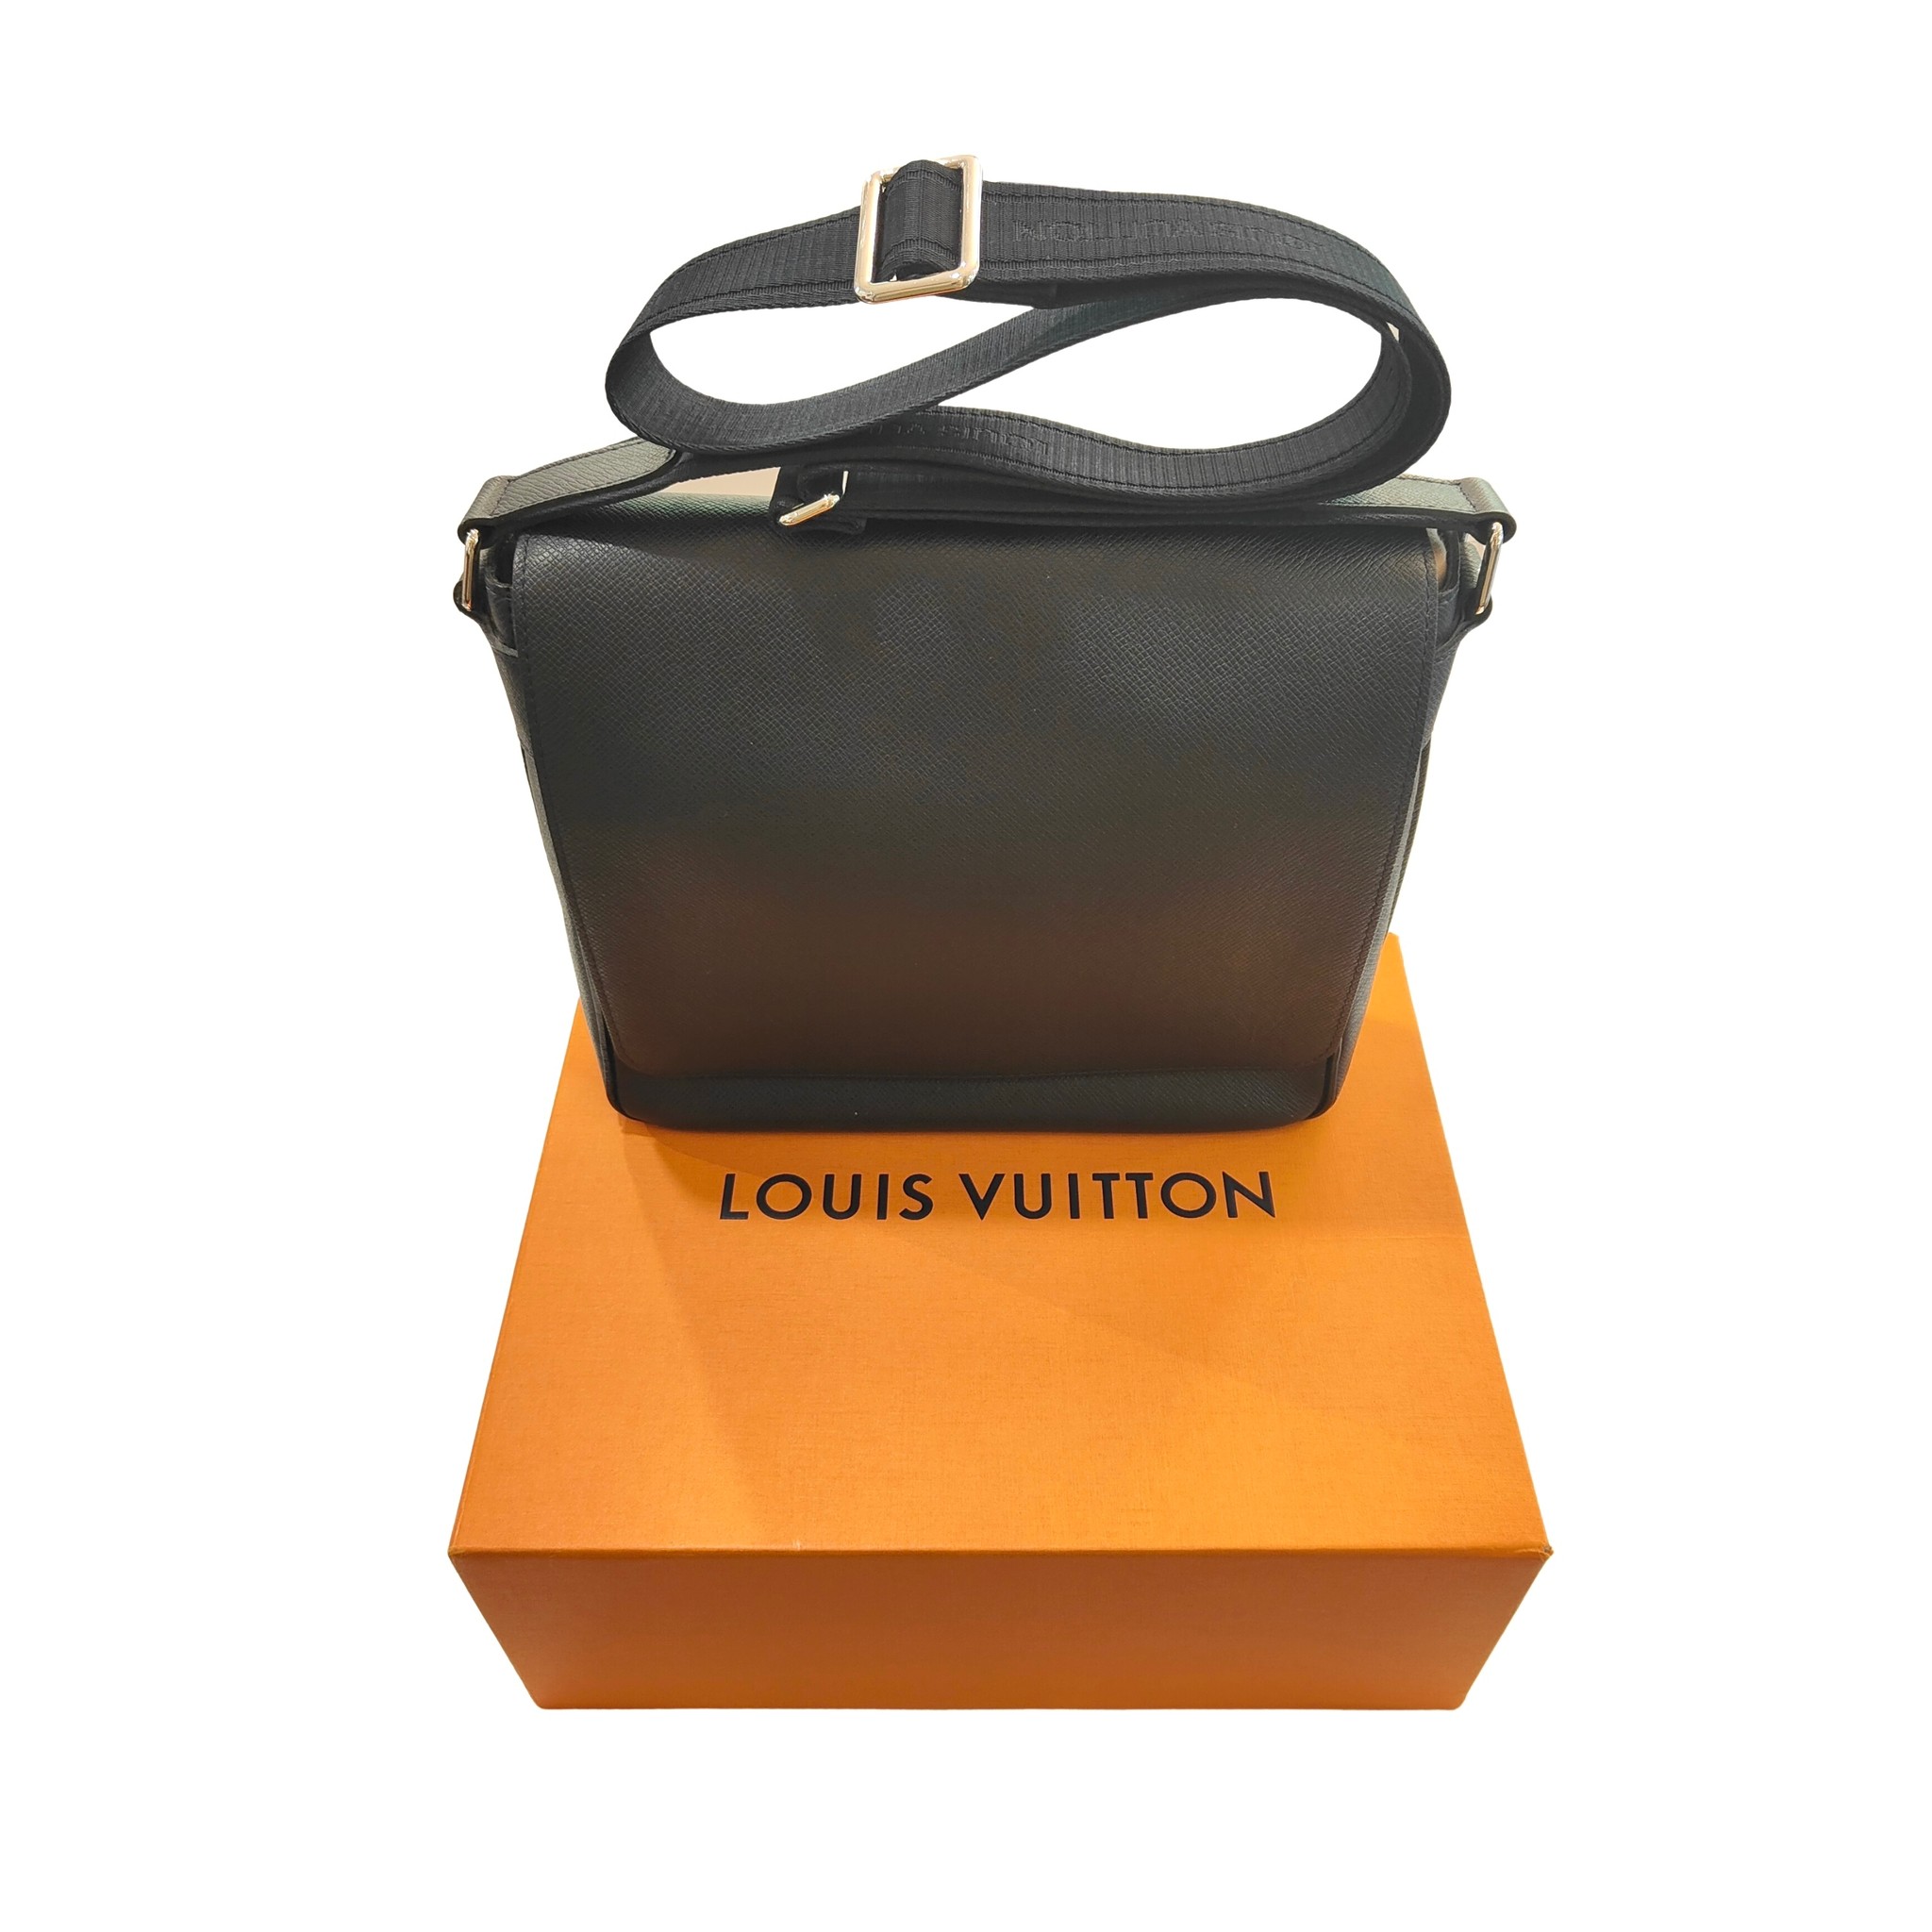 Louis Vuitton Sac Bandouliere Pm